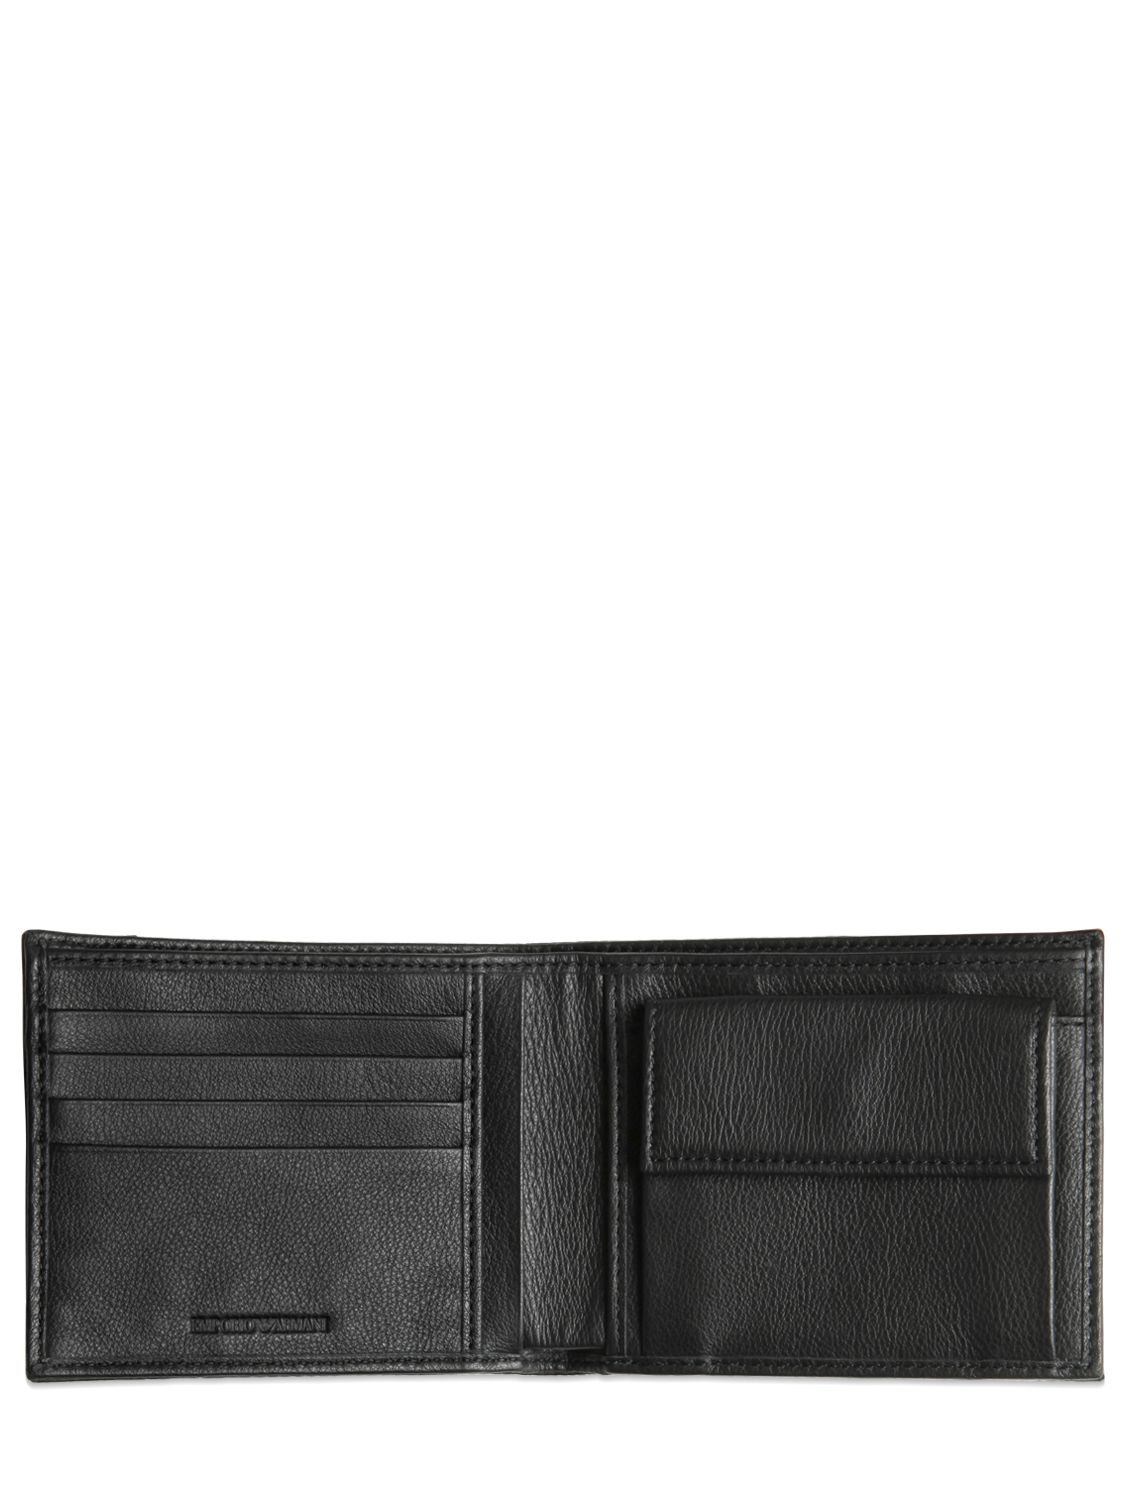 Camo Nylon \u0026 Leather Coin Pocket Wallet 